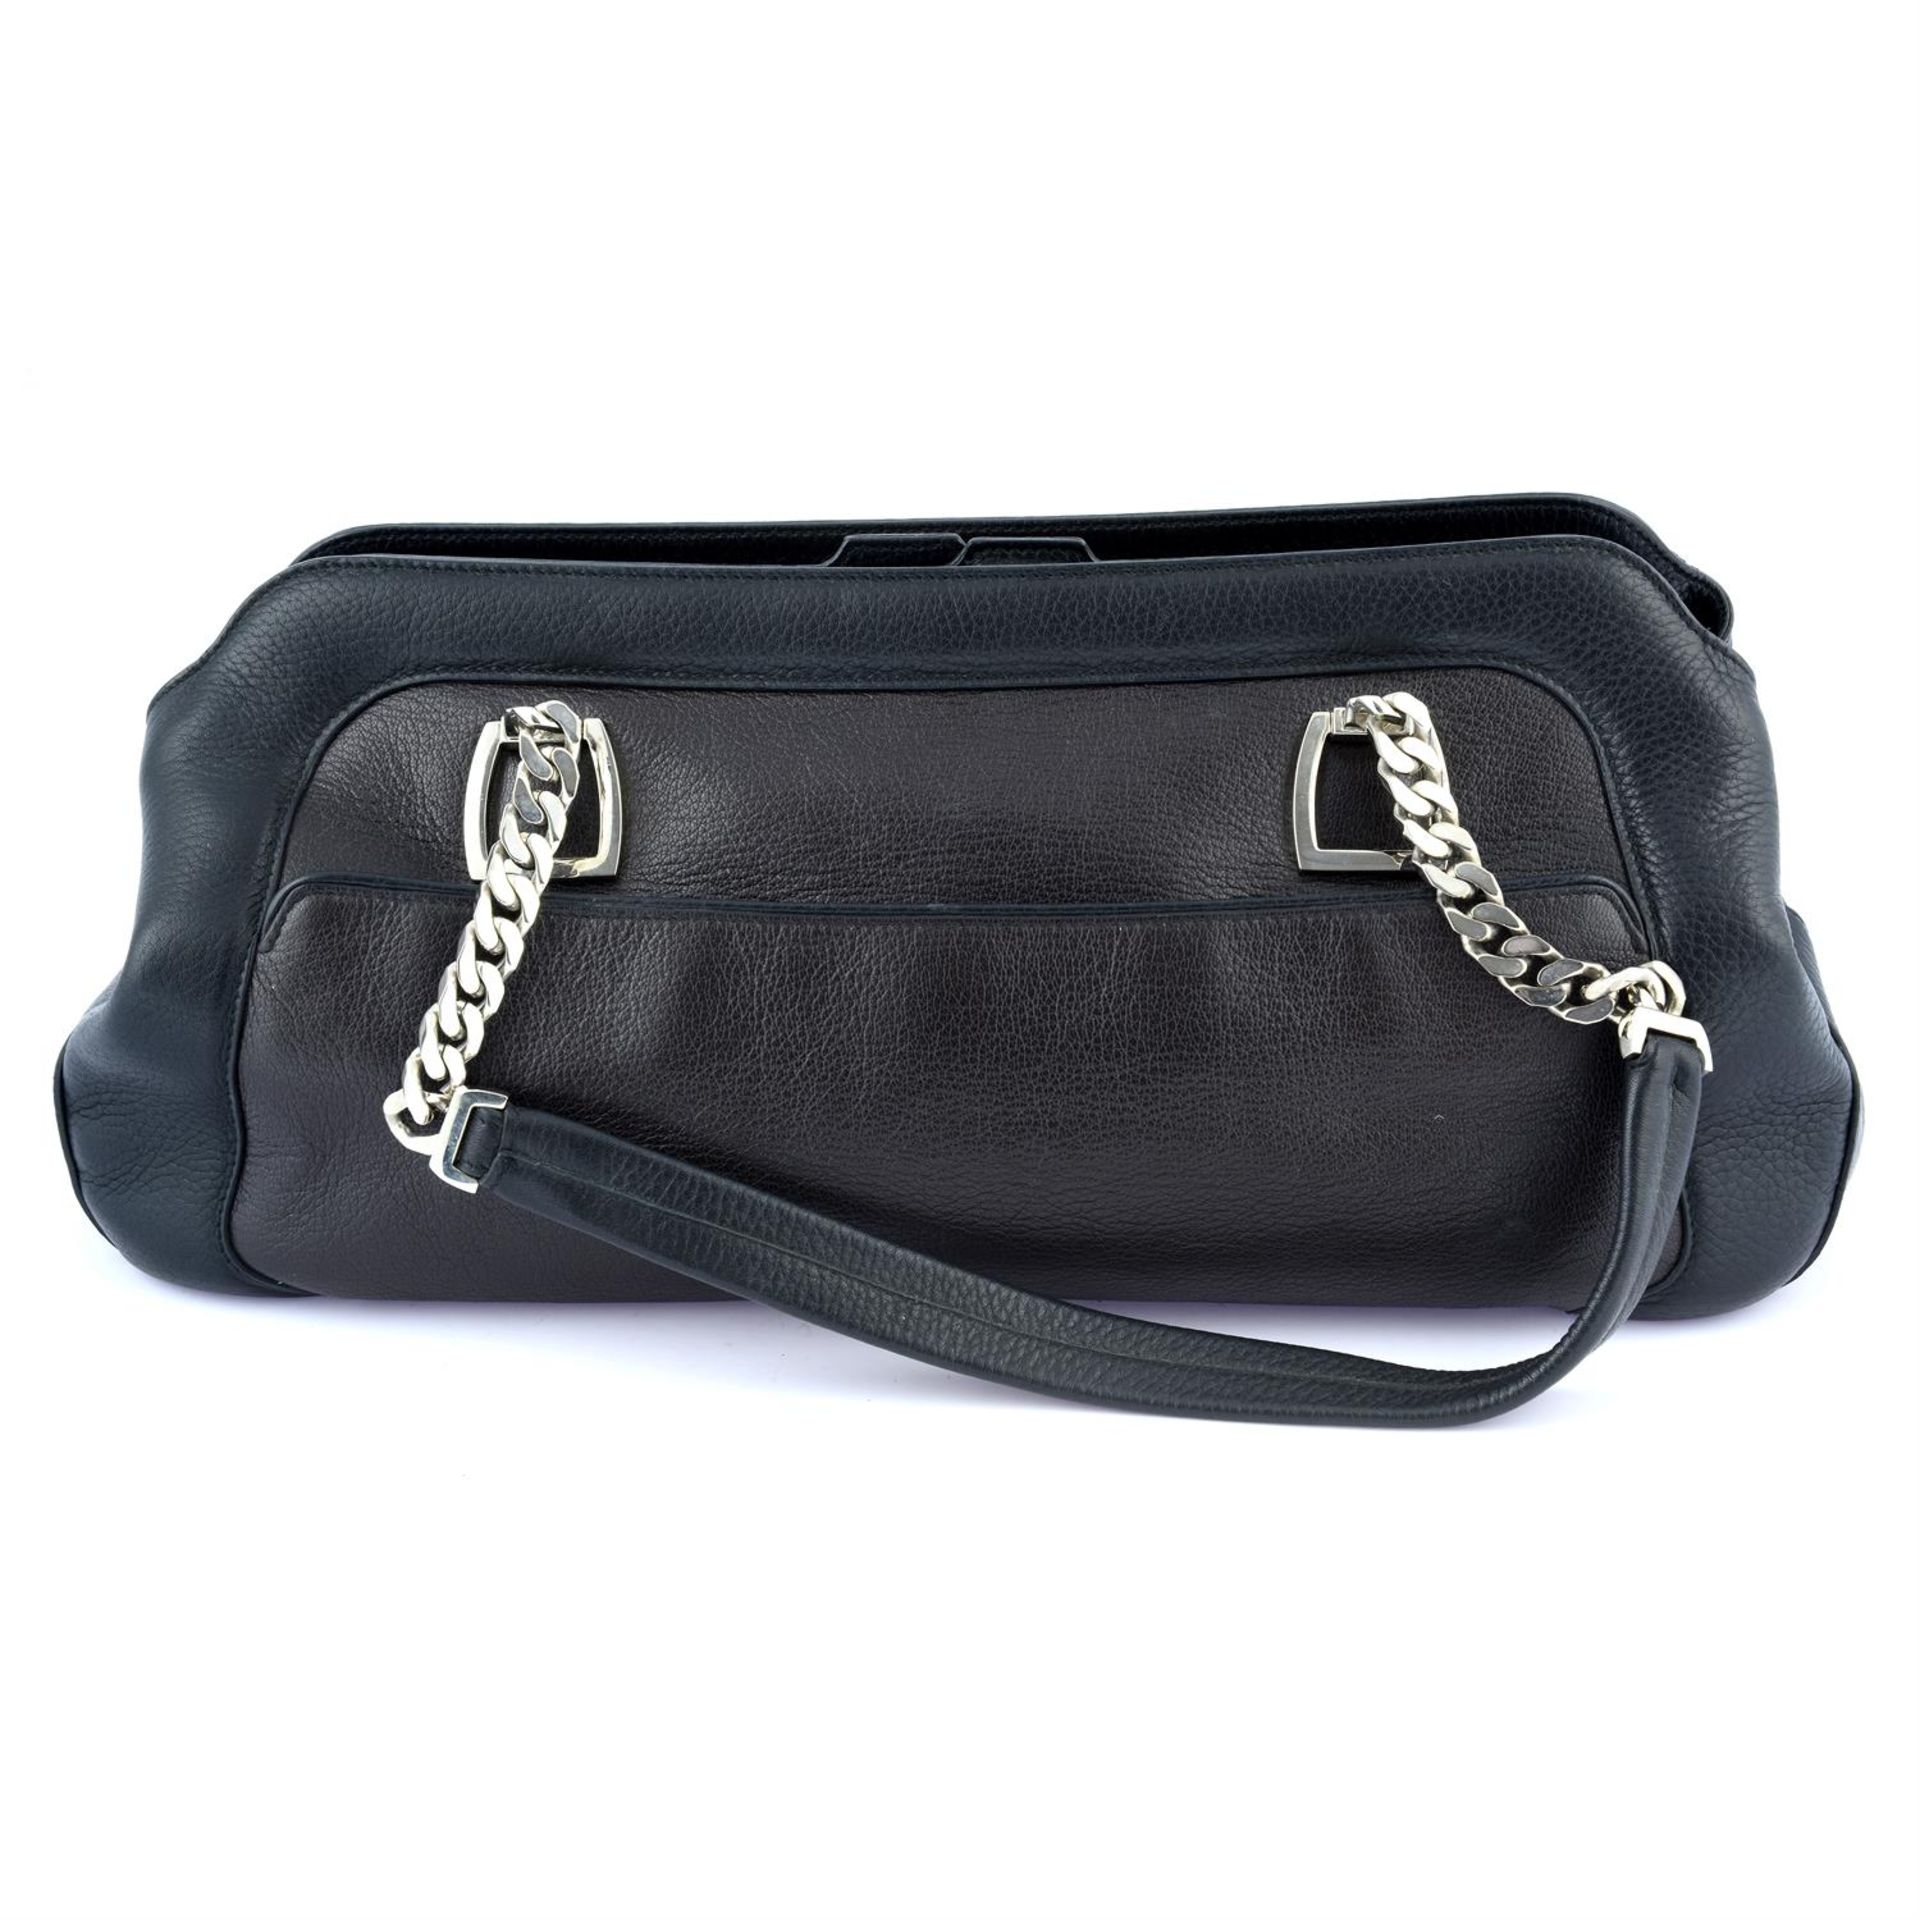 CARTIER - a black leather Multi-Pocket handbag.m - Image 2 of 4